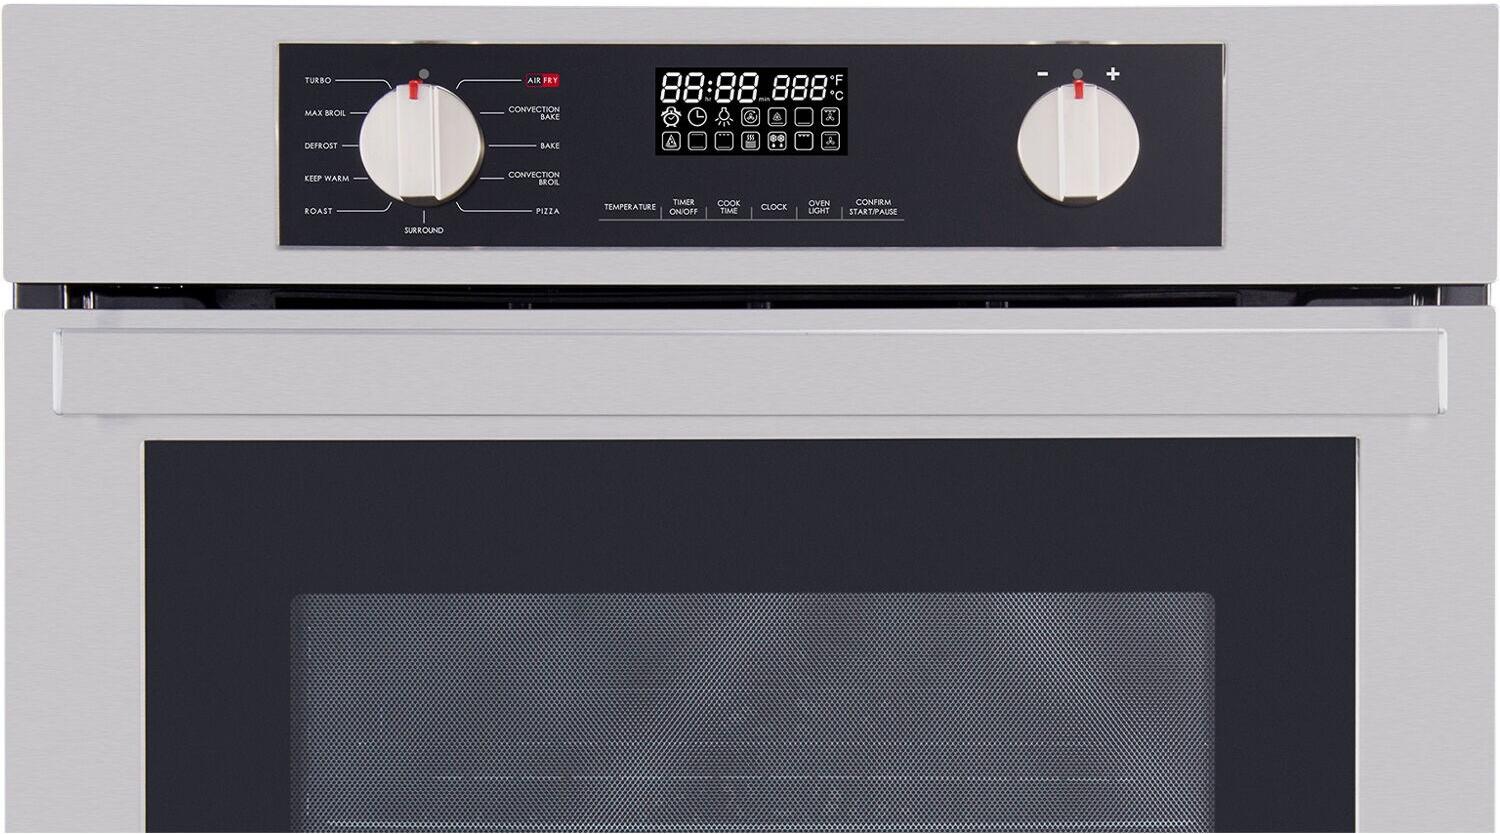 TSO-488GB, 40 QT Multi-Function Intelligent Oven